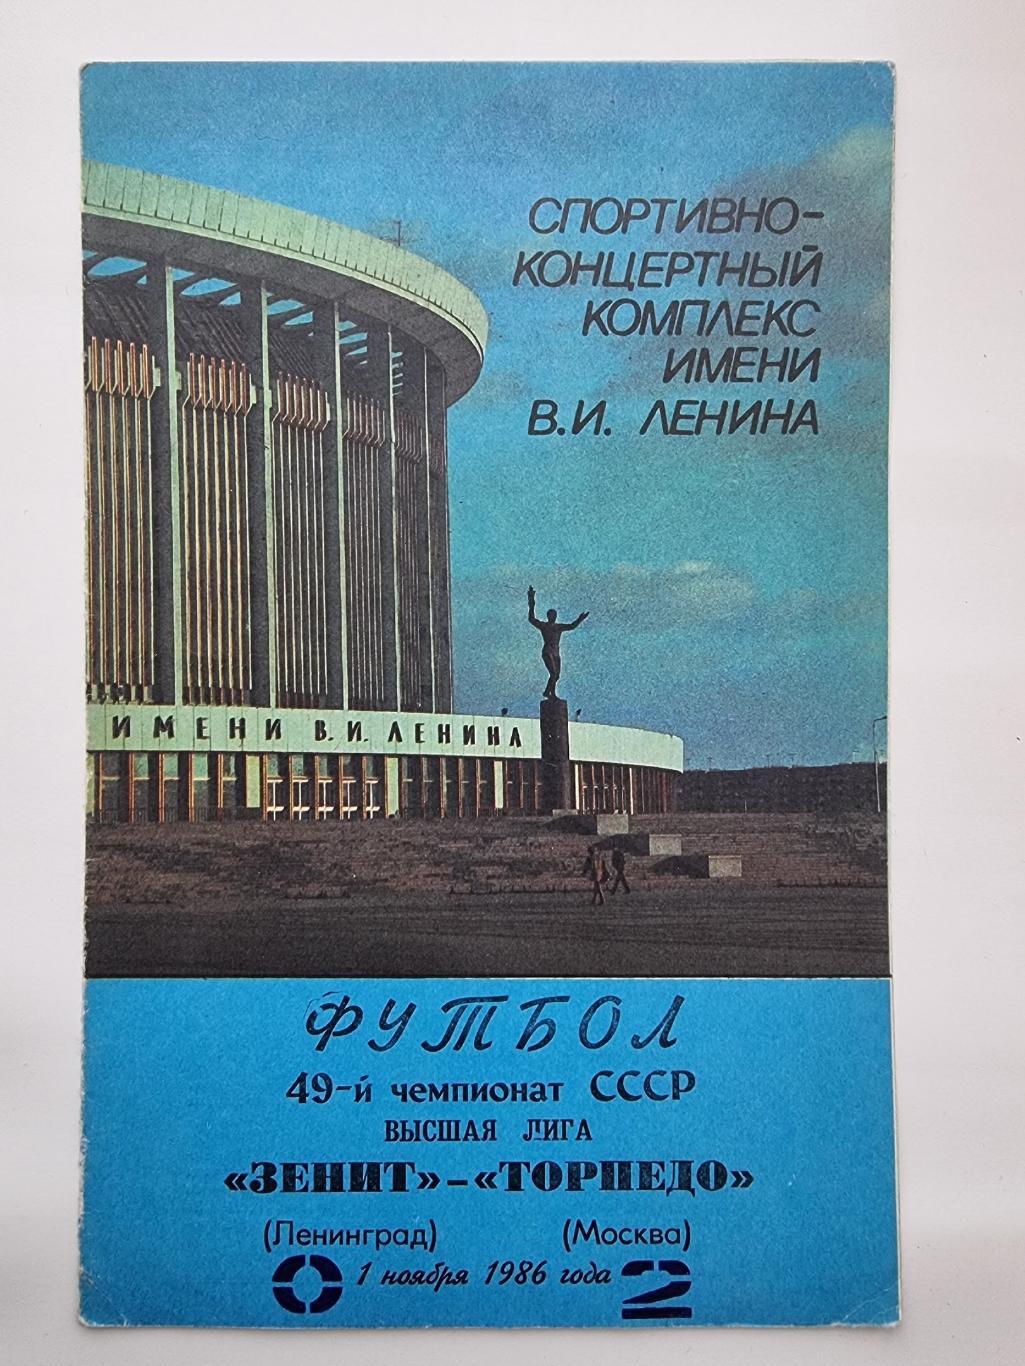 Зенит Ленинград - Торпедо Москва 1986.